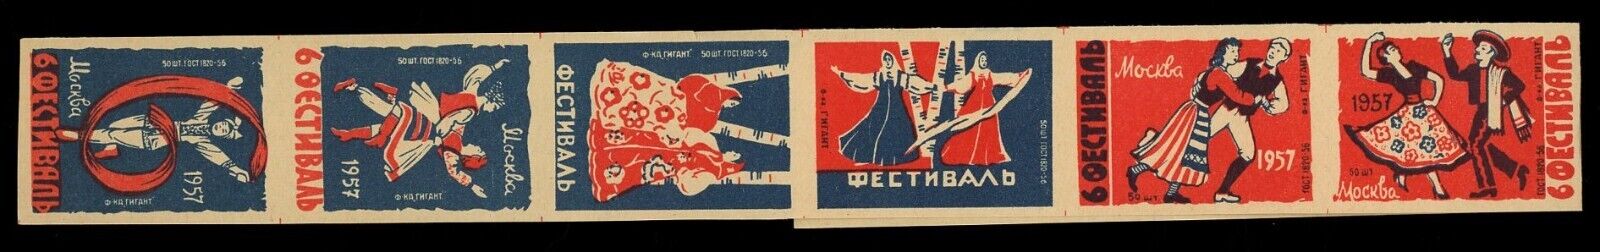 1957 Uncut Sheet of 9 Russian Dancing Theme Match Book Labels (9) Без бренда